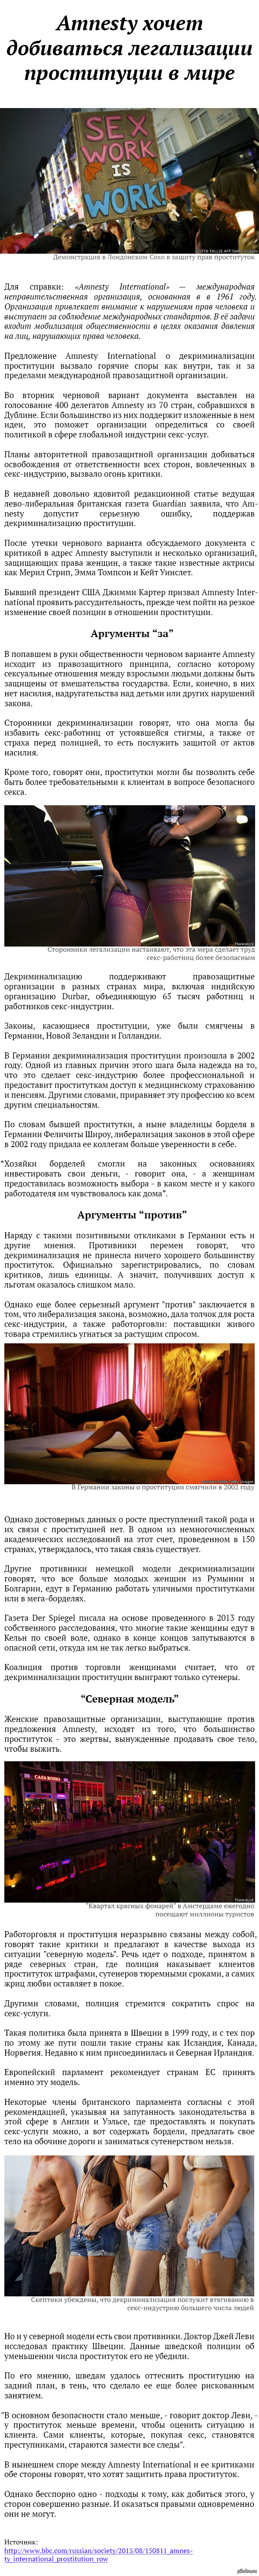 Amnesty           ""  "". : http://www.bbc.com/russian/society/2015/08/150811_amnesty_international_prostitution_row